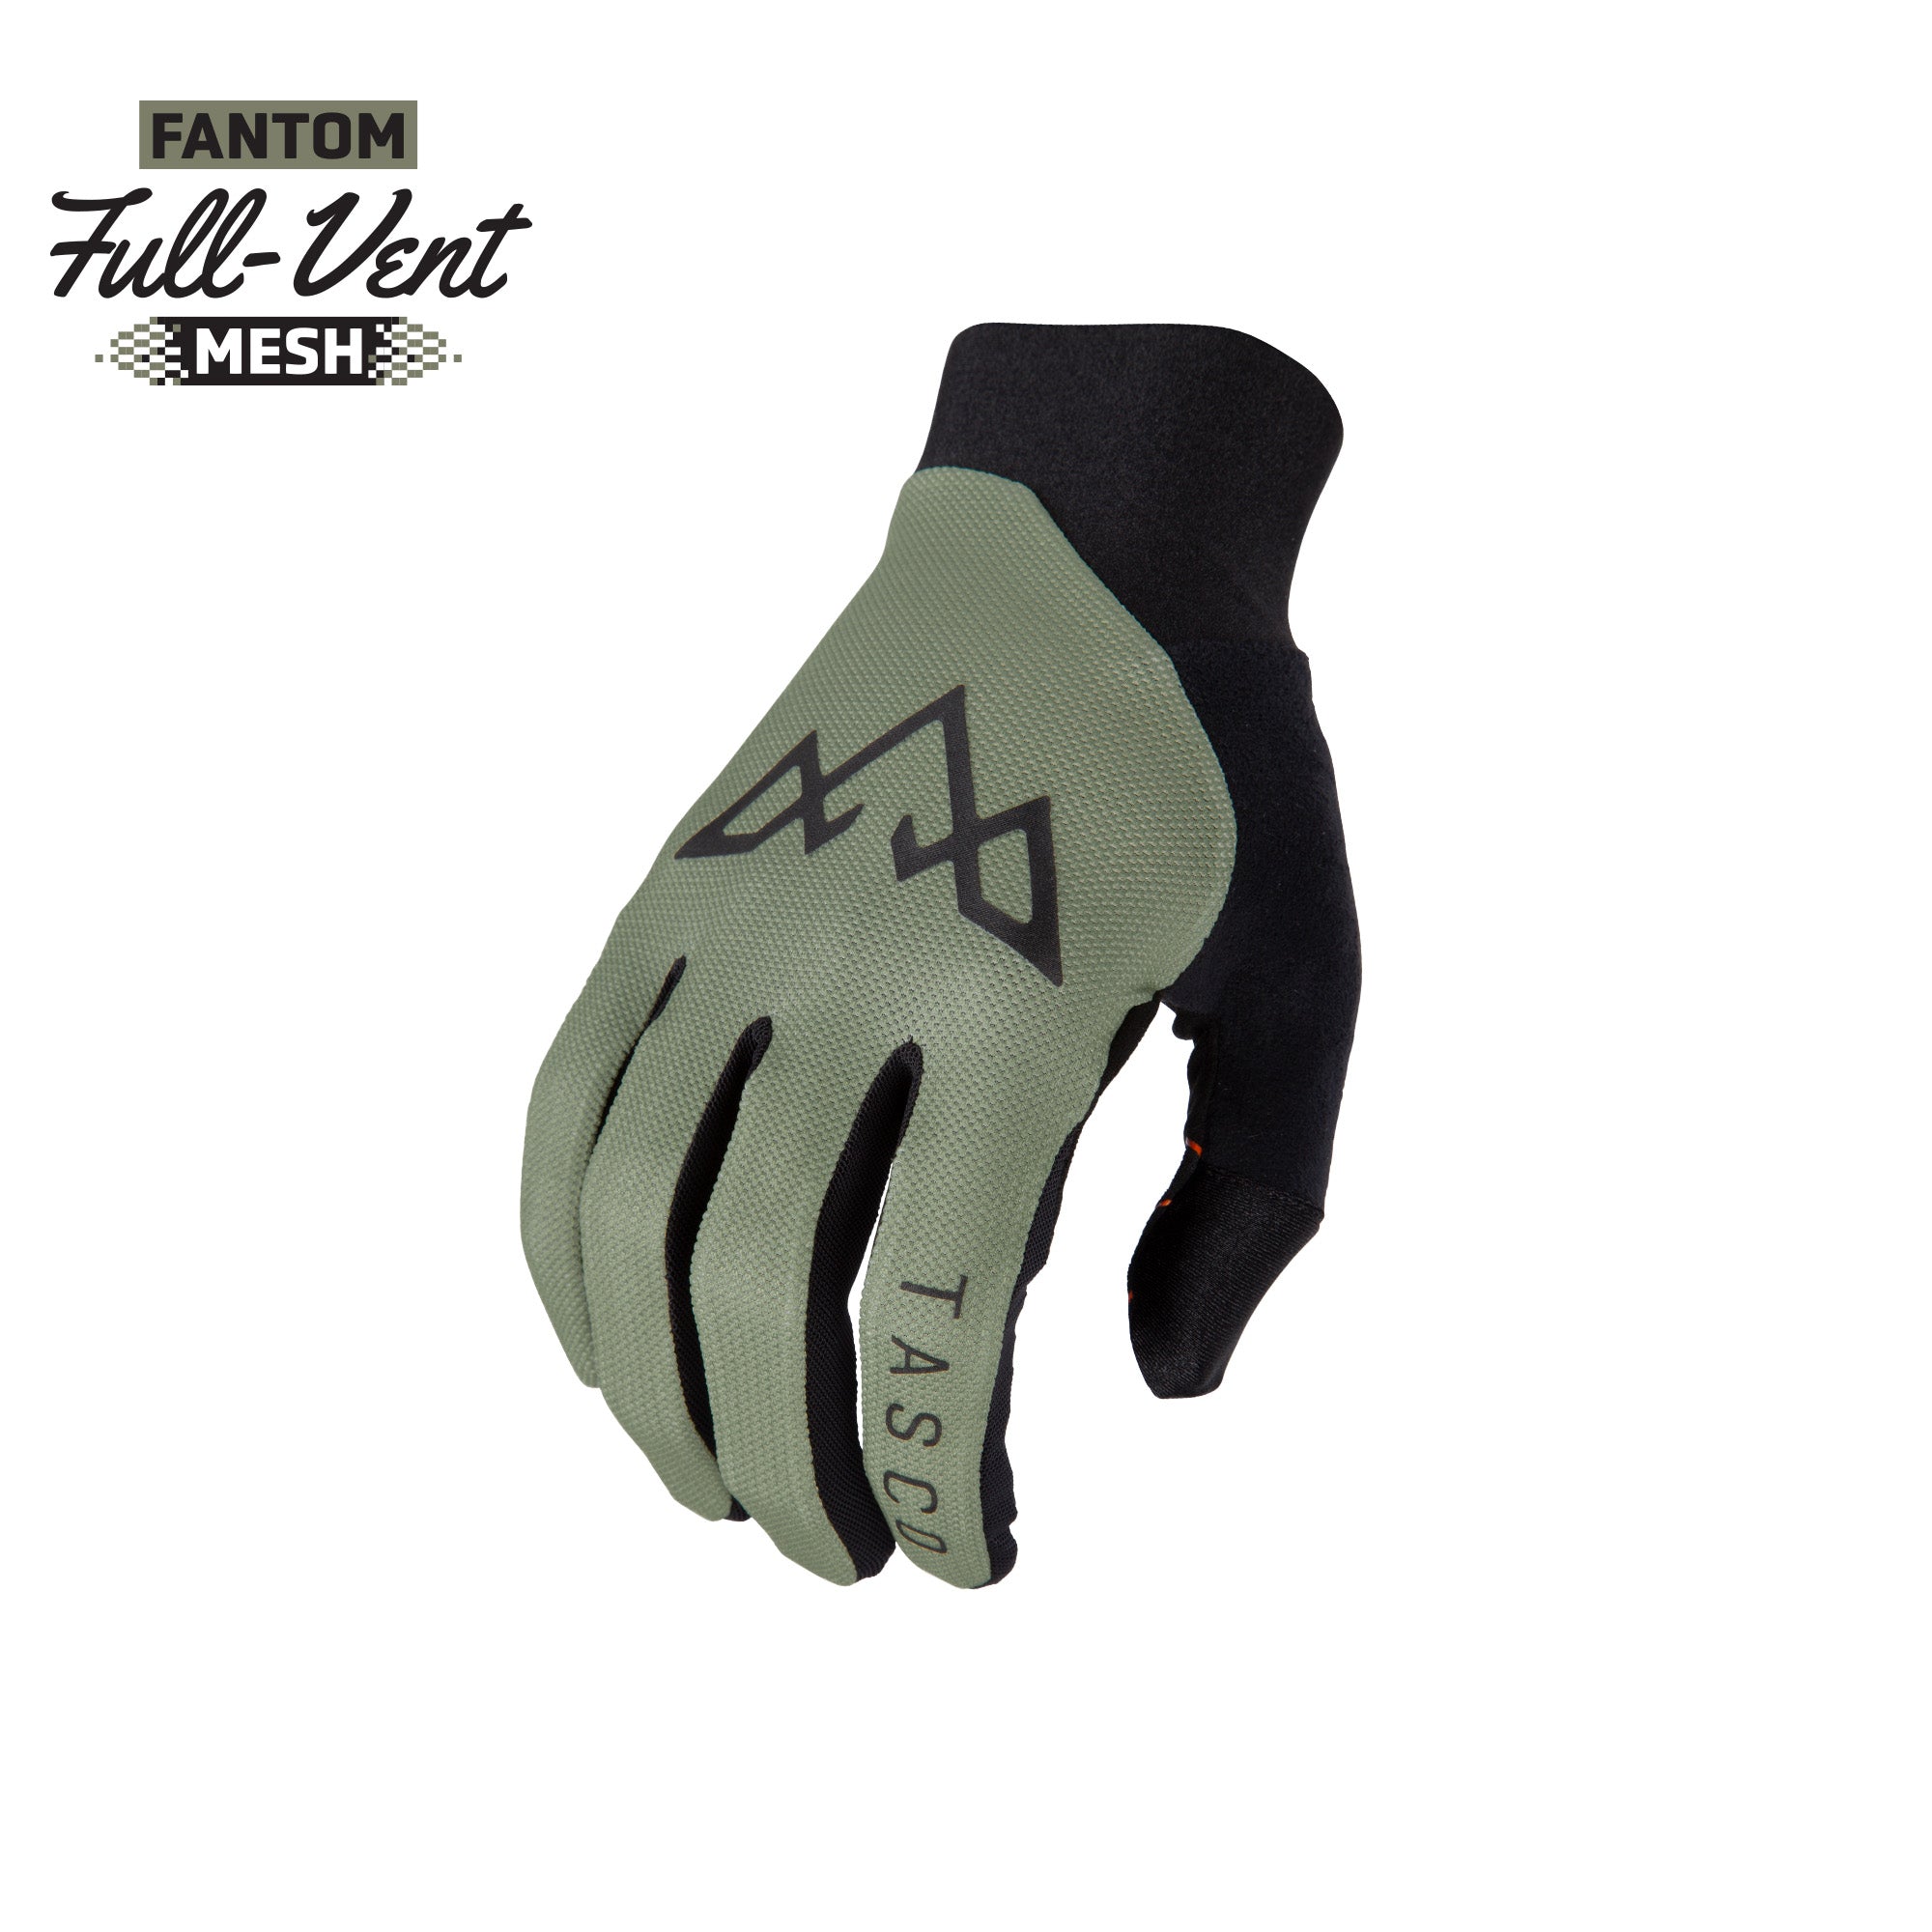 TASCO MTB Fantom Ultralite bike gloves in sage and black